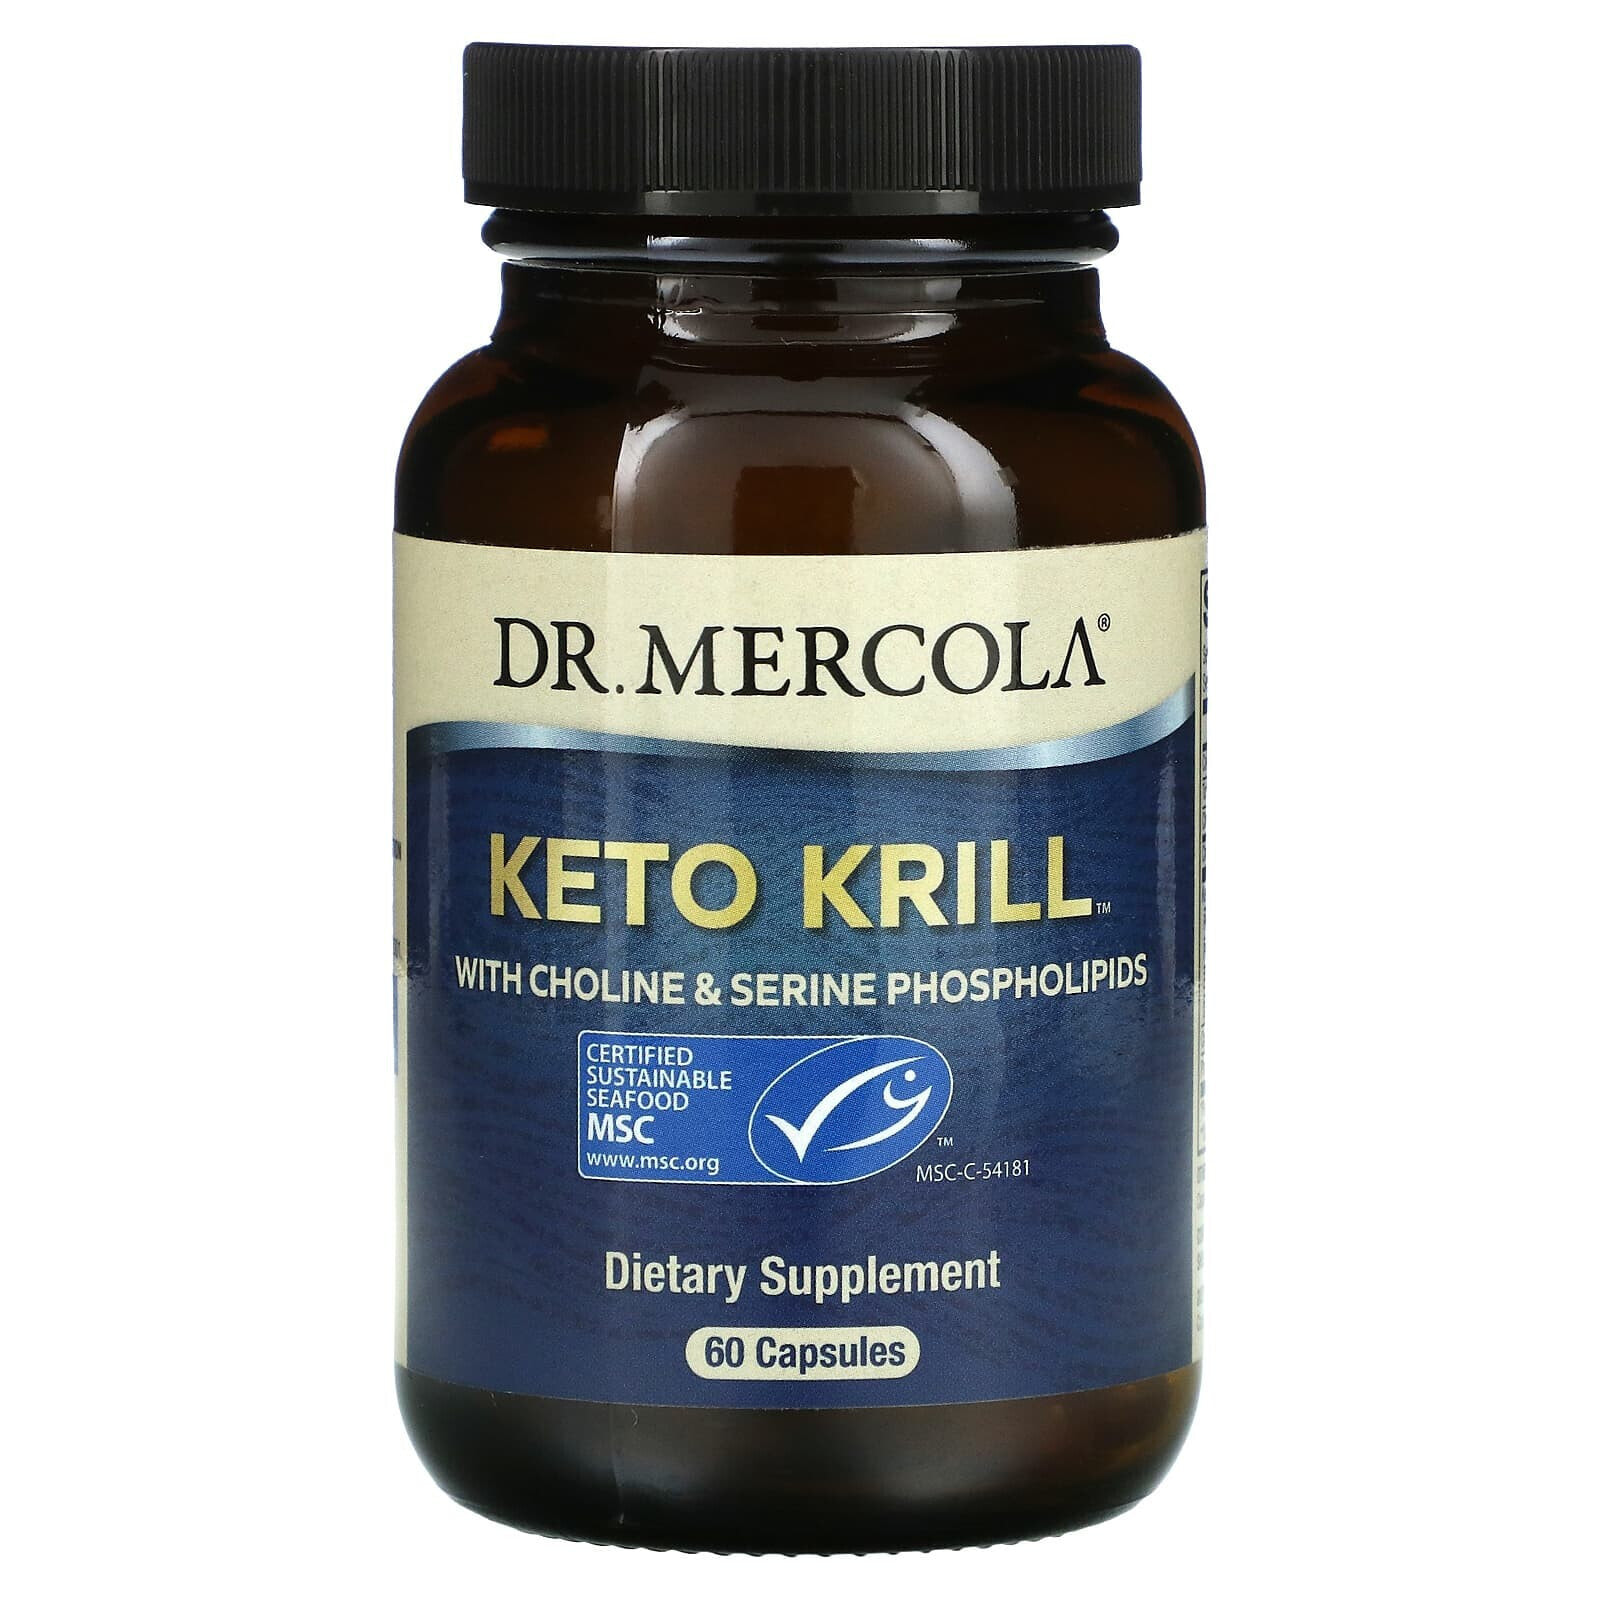 ДР. Меркола, Keto Krill, криль с фосфолипидами холина и серина, 60 капсул